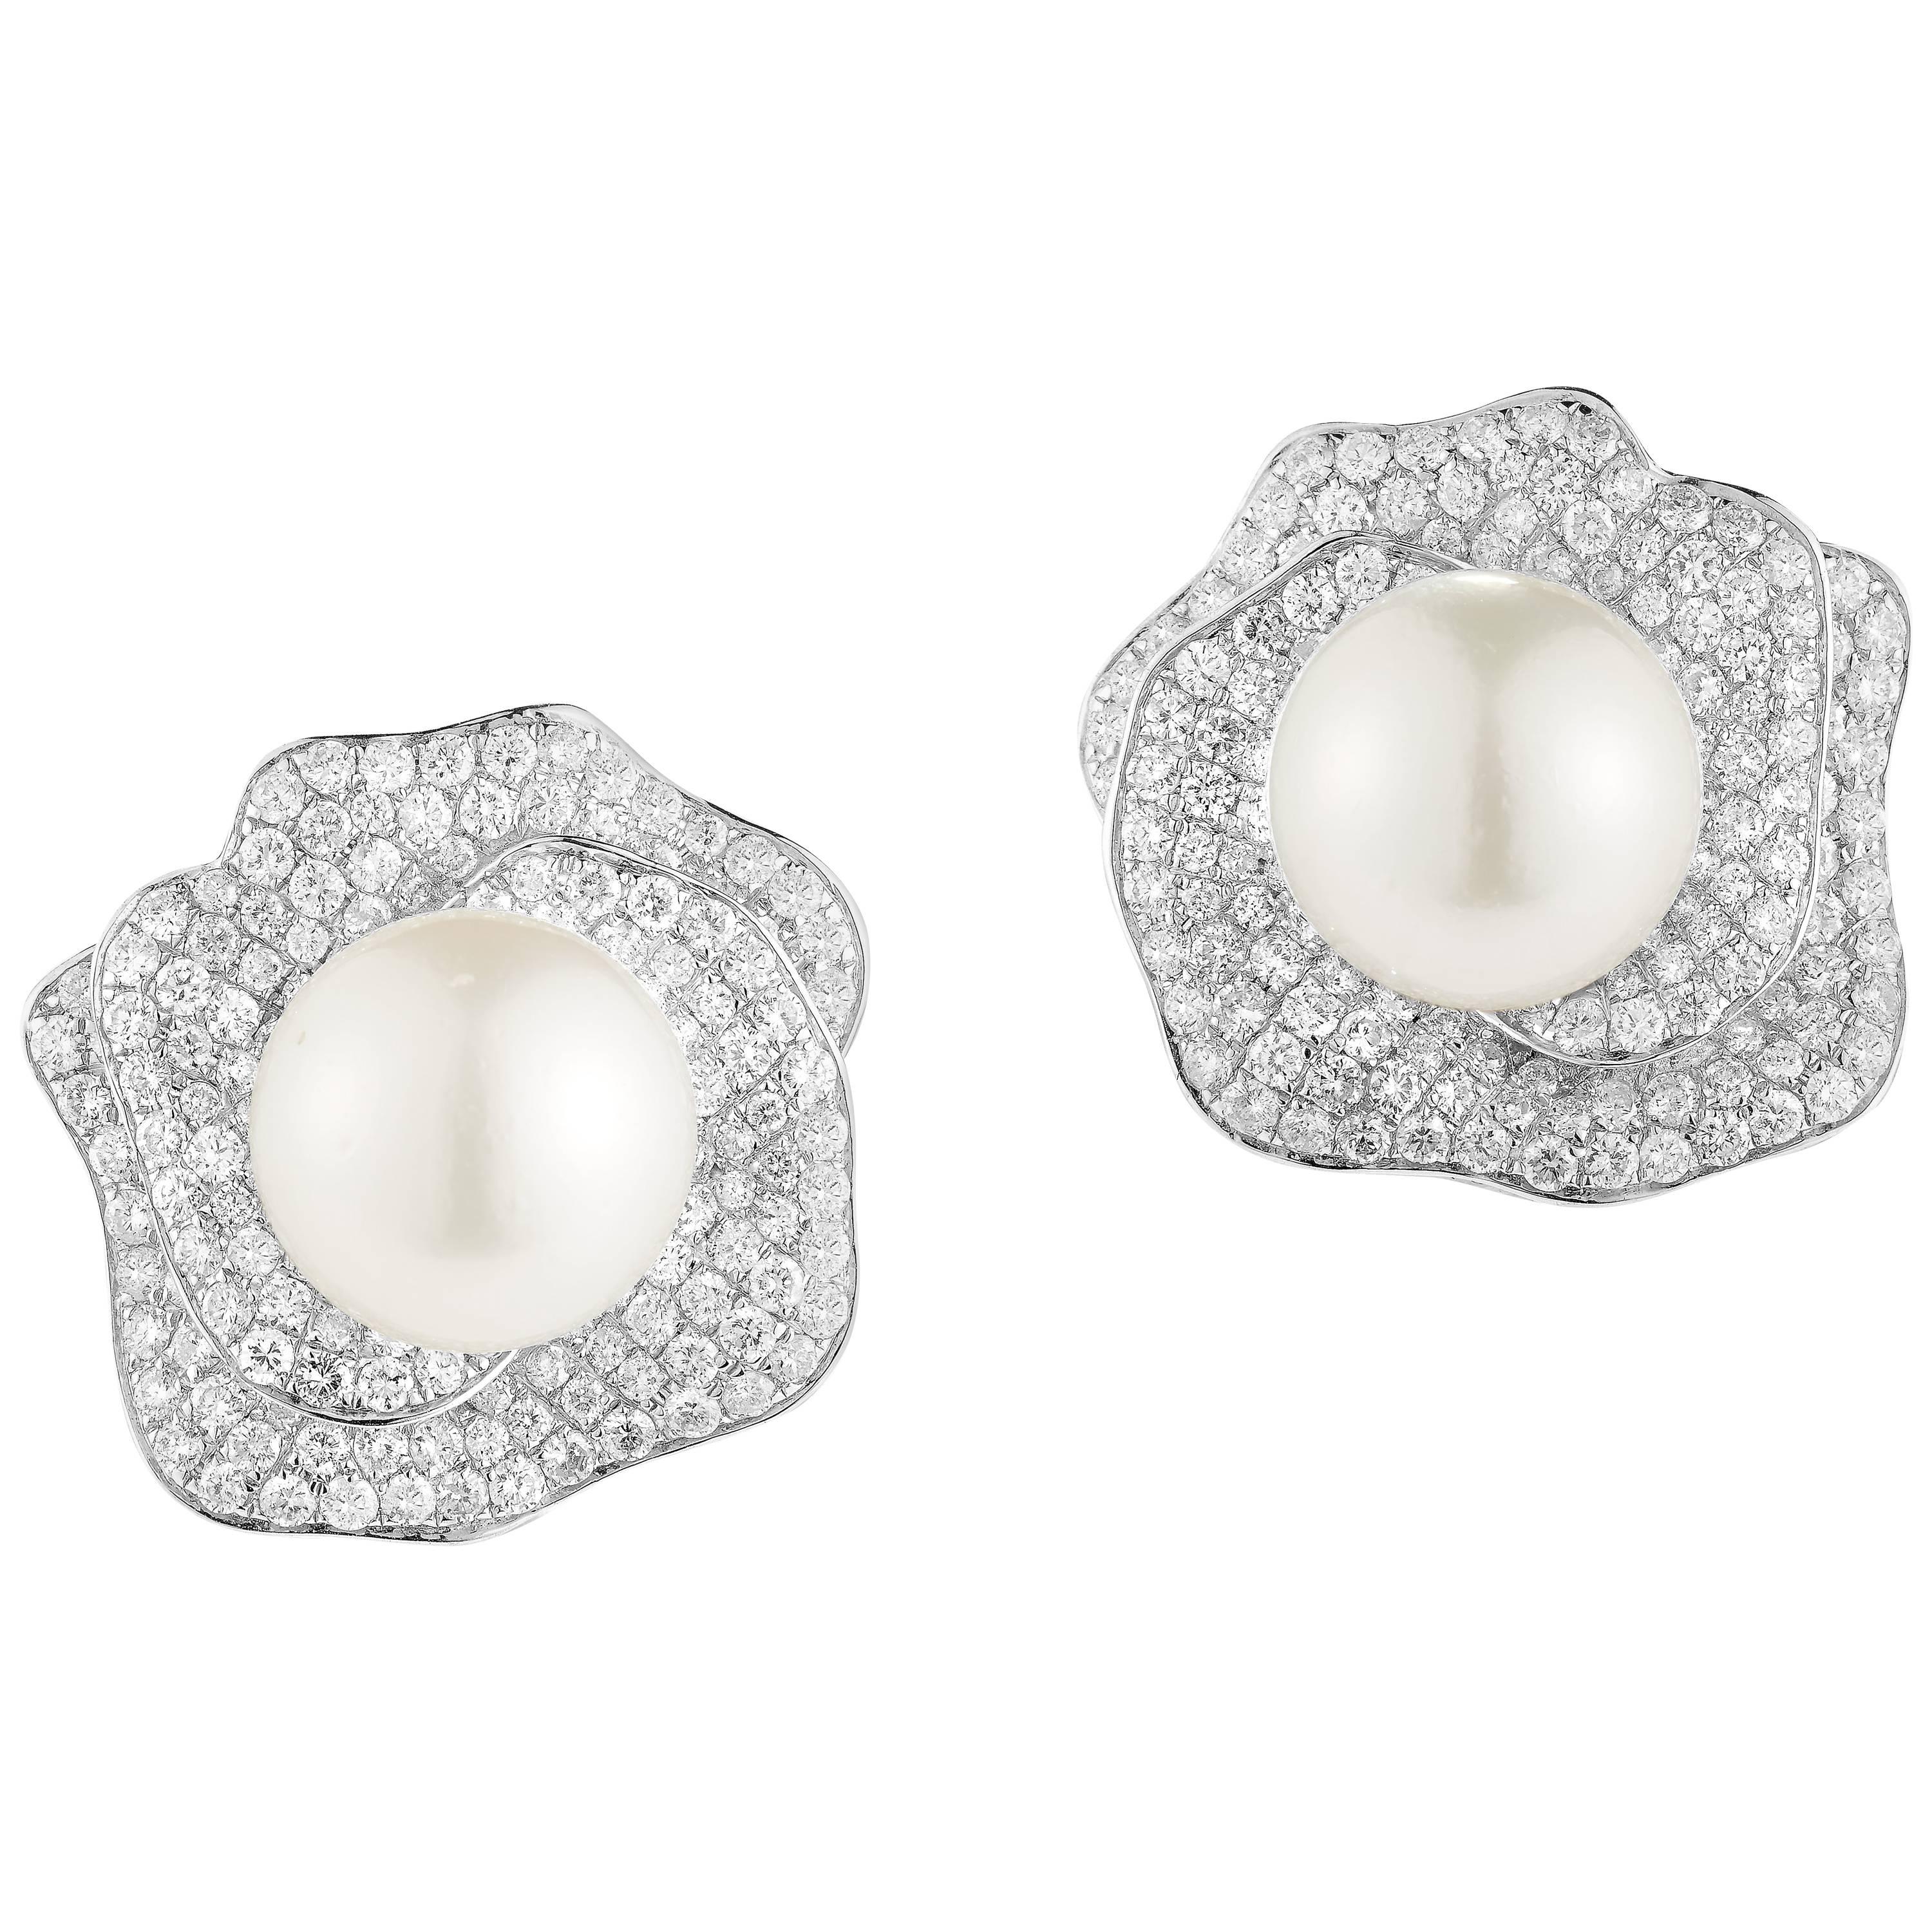 Elegant Diamond and Pearls Earrings